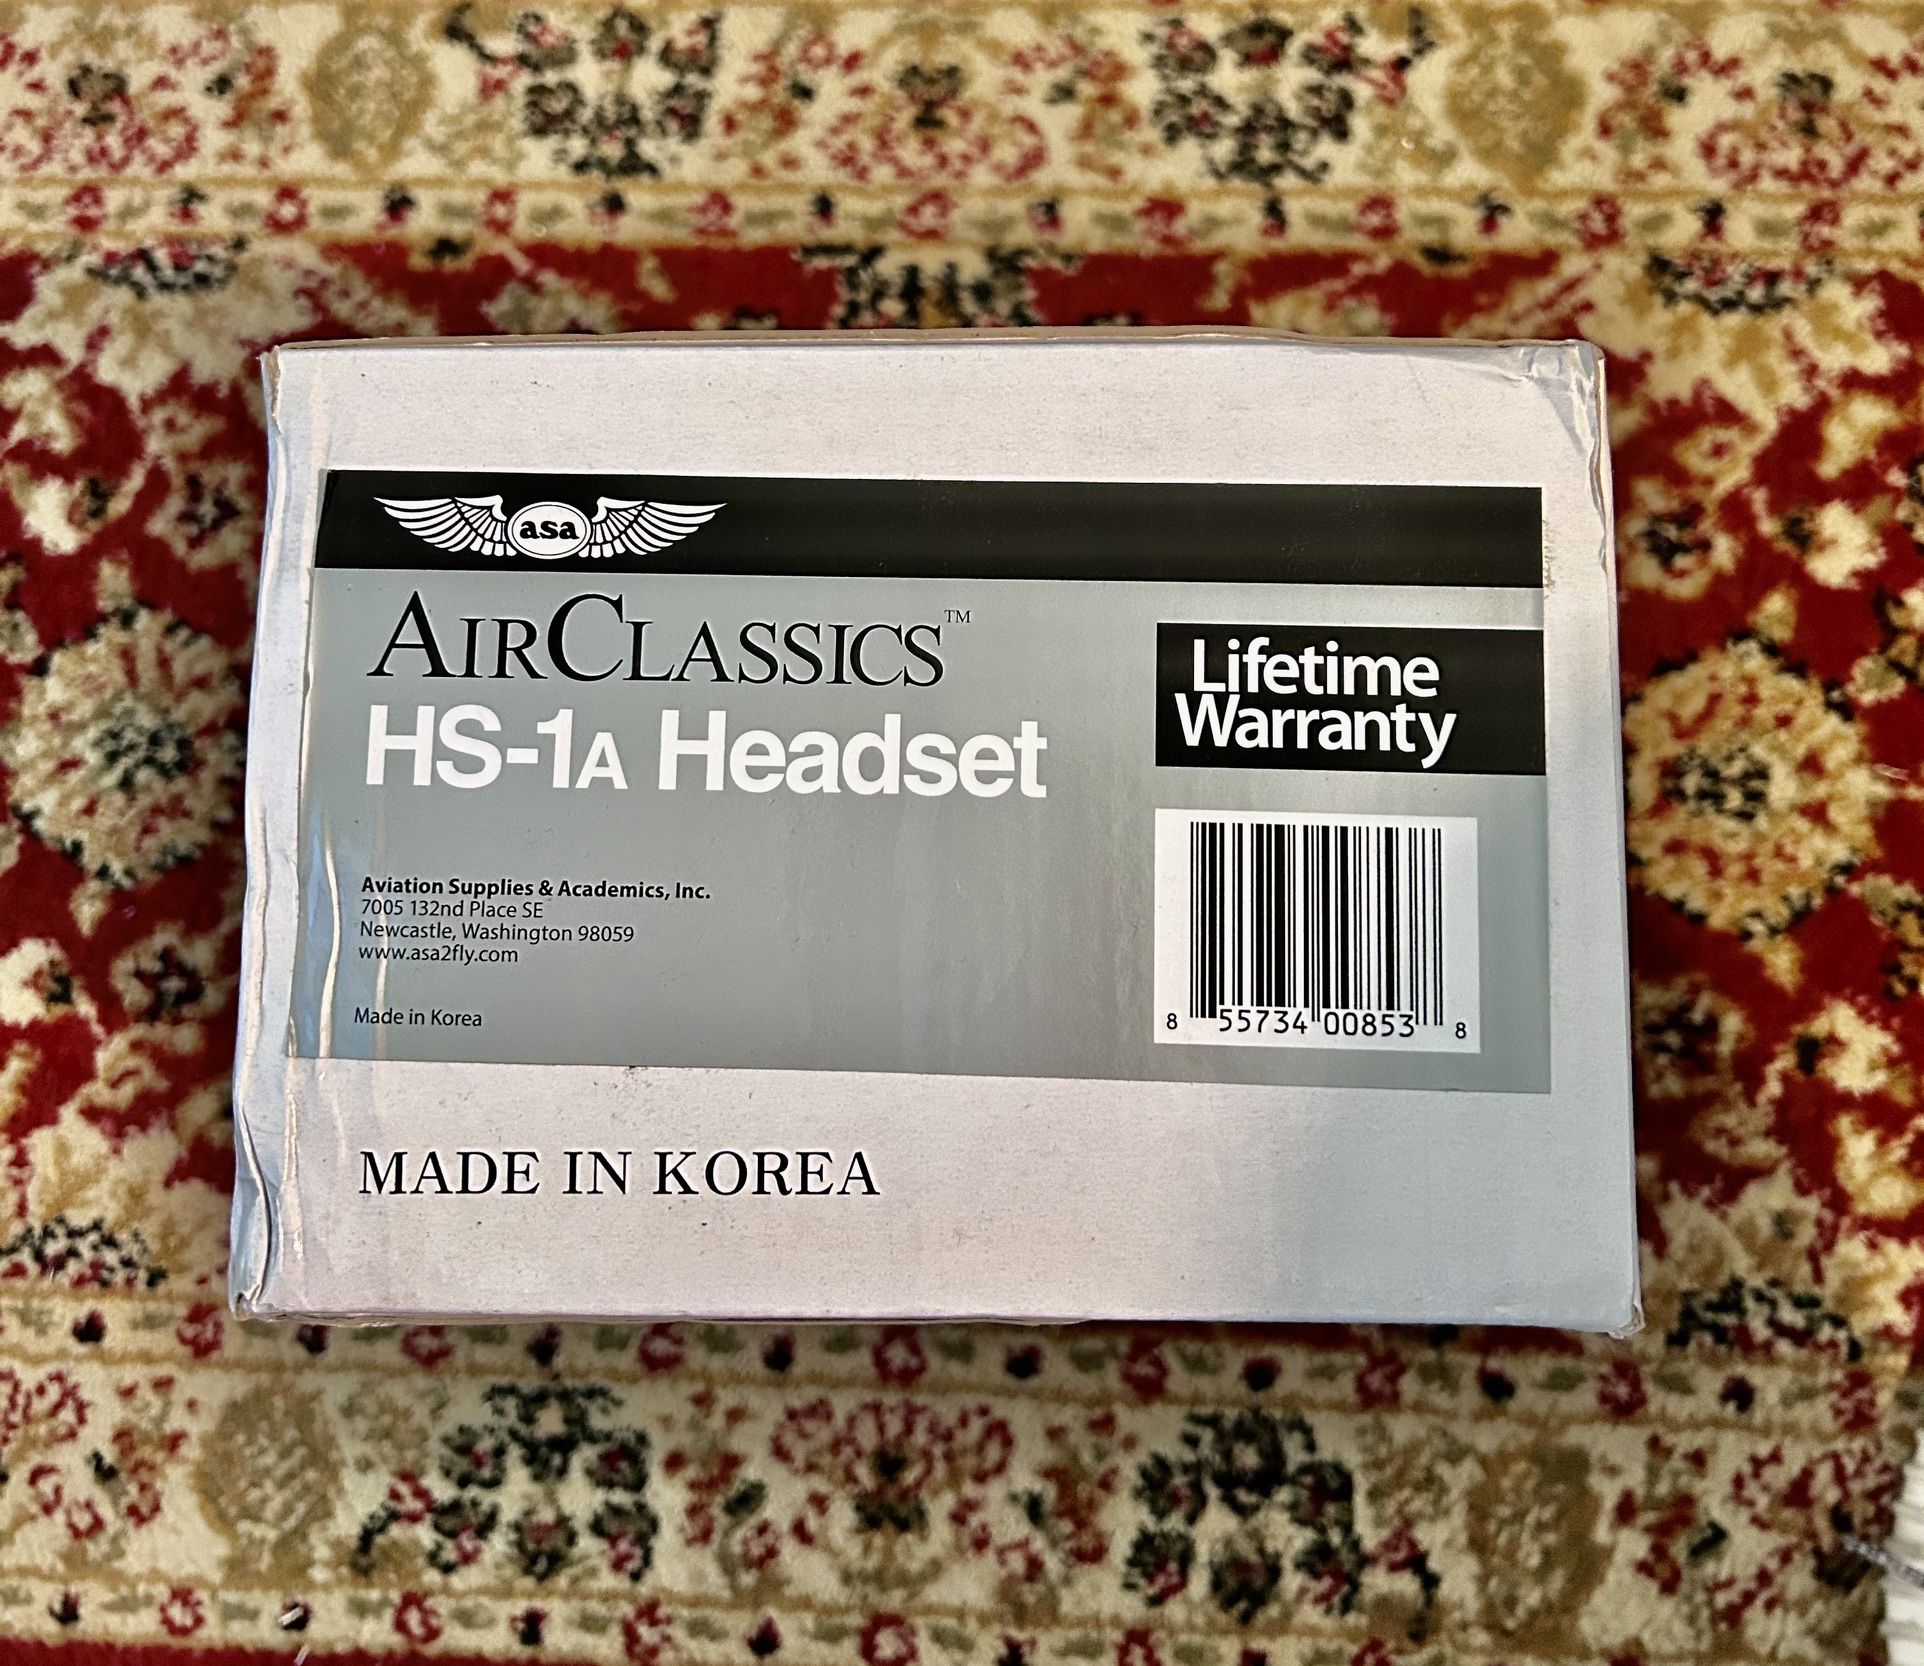 ASA AirClassics HS-1A Aviation Headset 